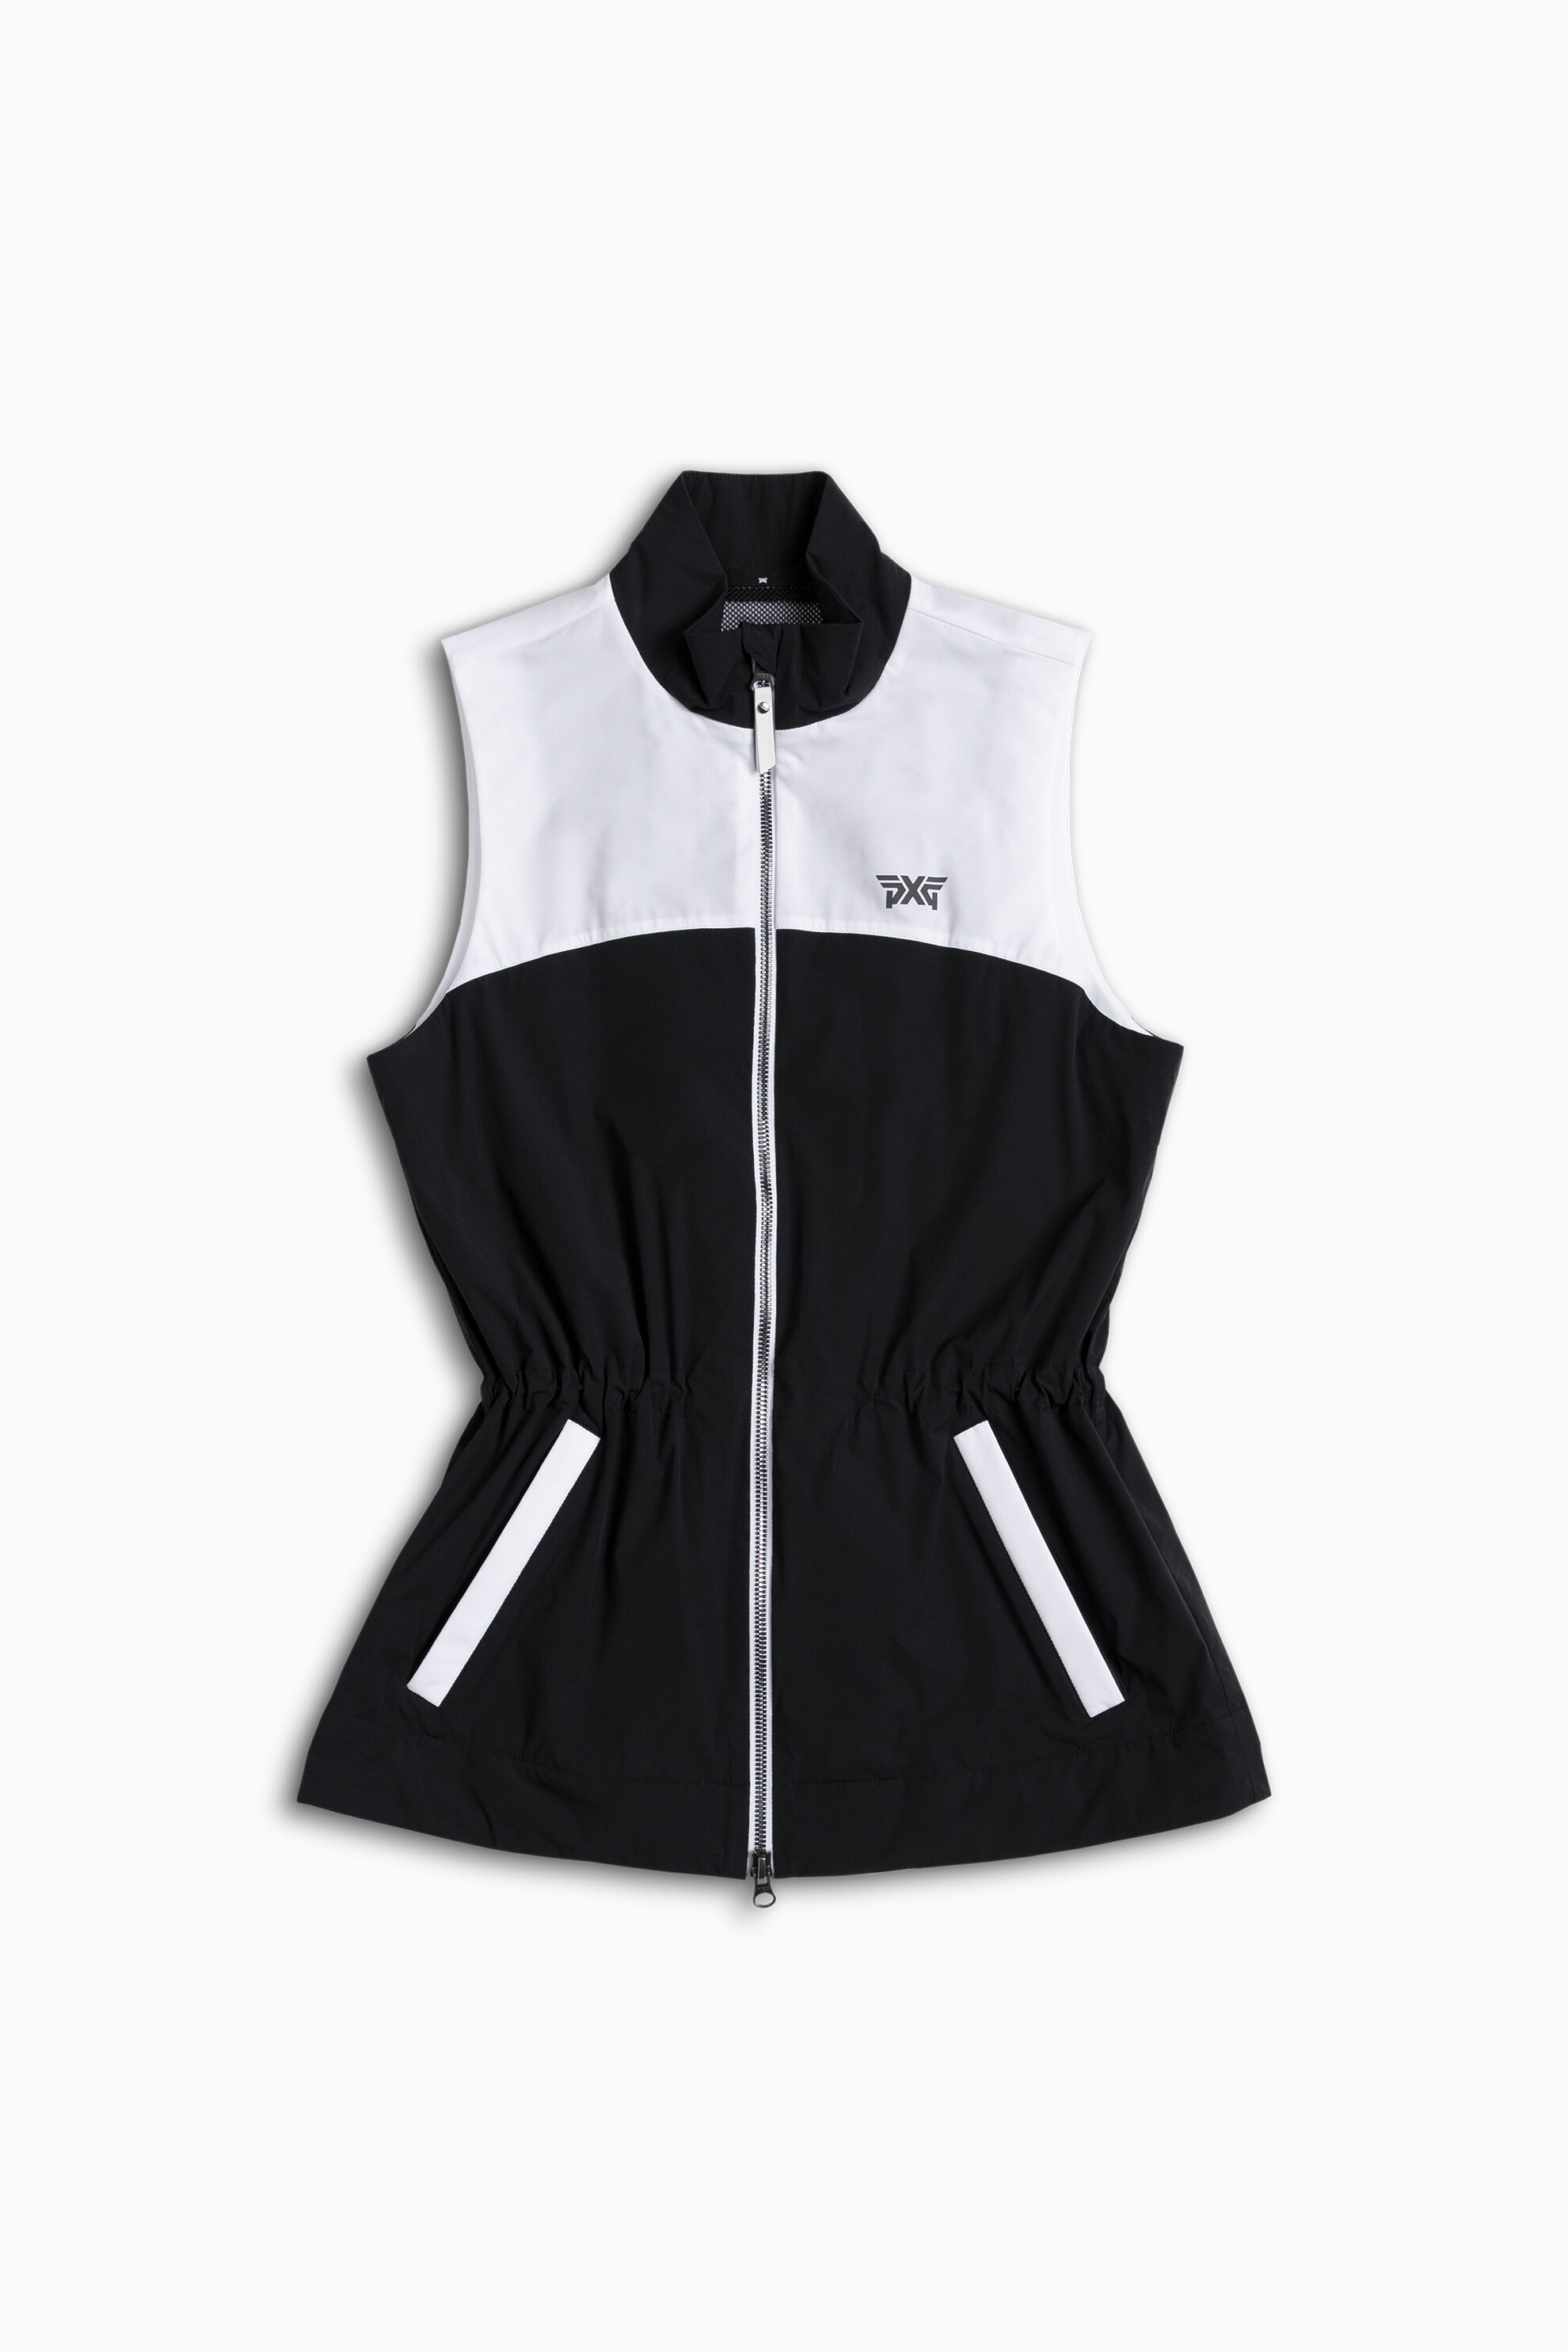 Shop Men's Golf Vests- Full Zip Vests and More